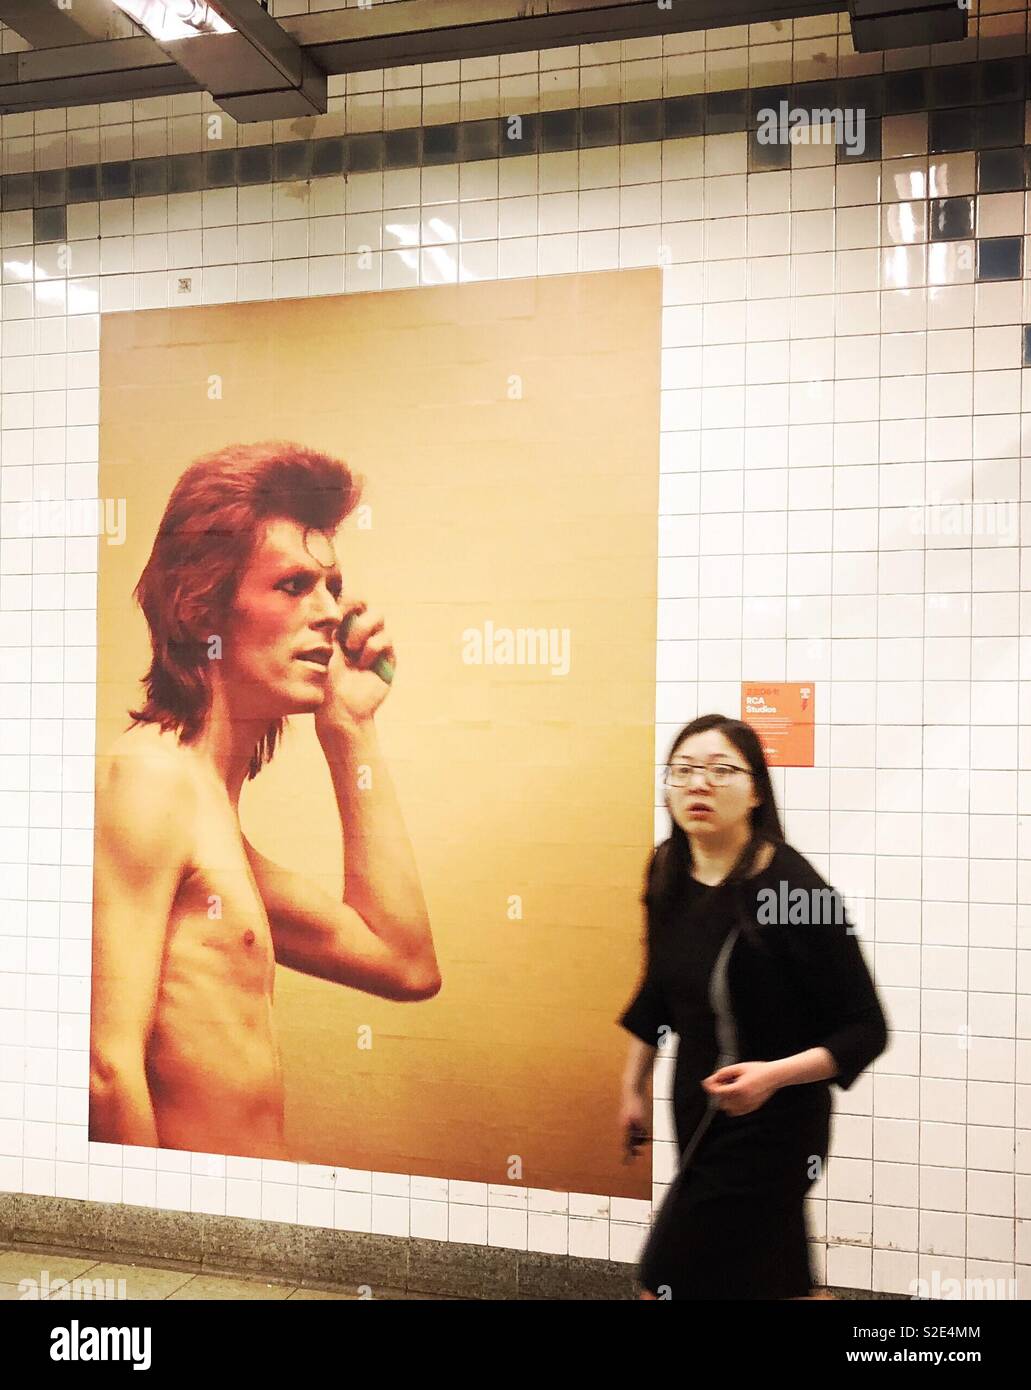 Art in New York City subway station Stock Photo